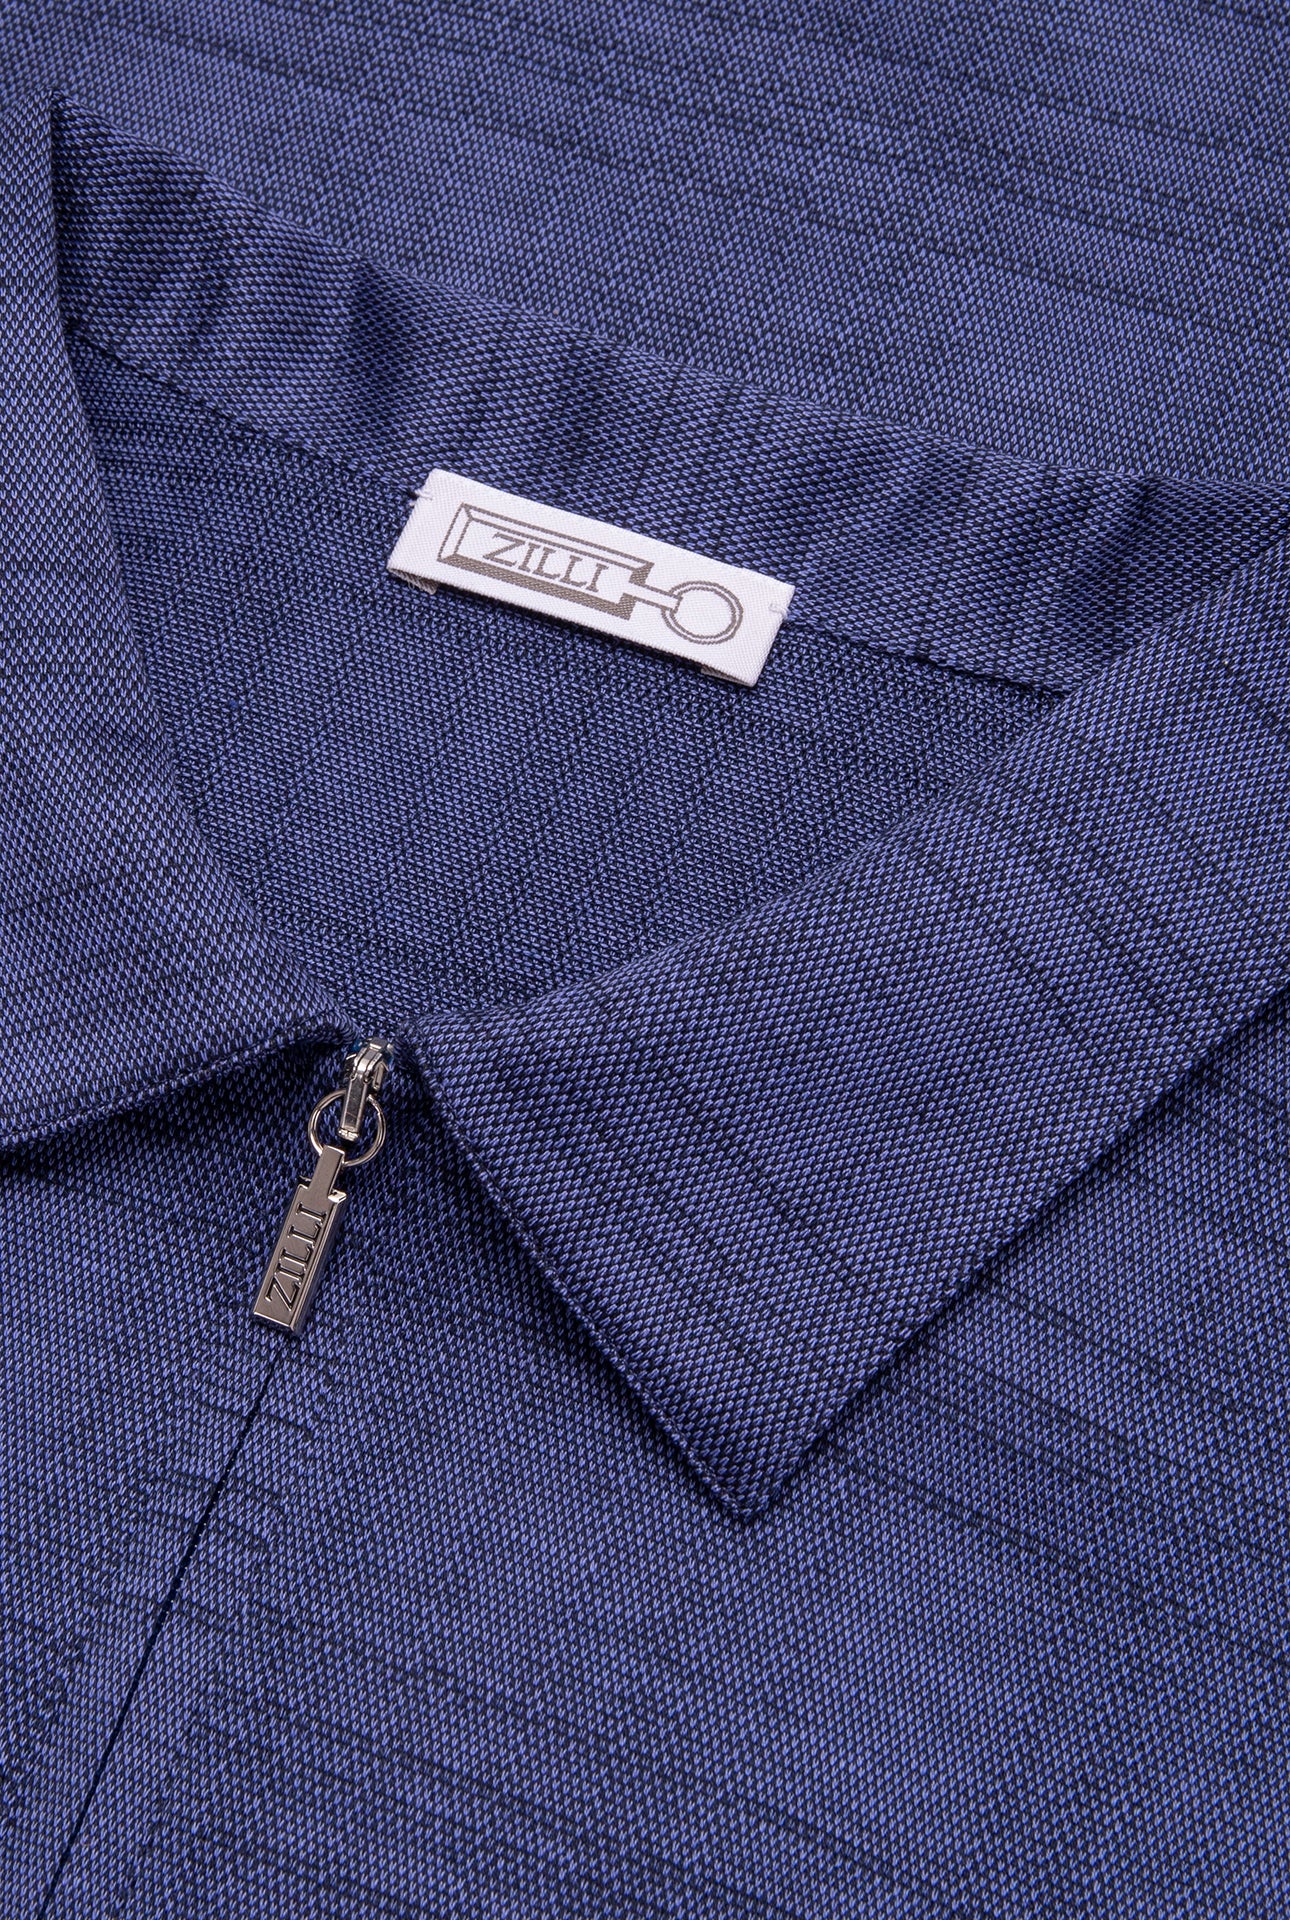 Classic Short Sleeve Zipped Polo